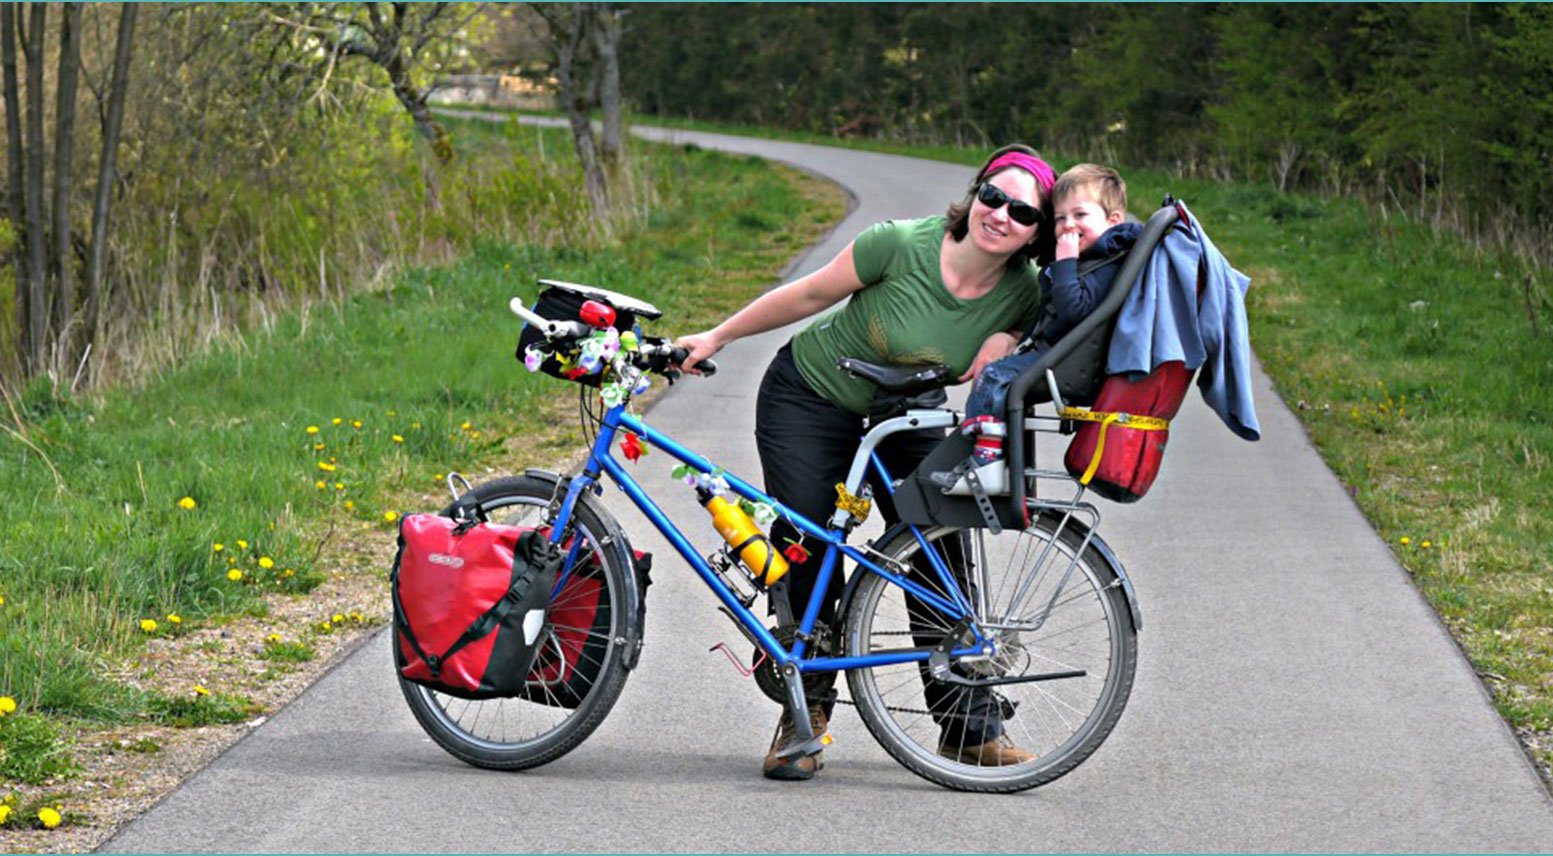 My sister bikes. Велоприцеп Trek. Велосипед для туризма. Велосипед для дальних путешествий. Путешествие на велосипеде.